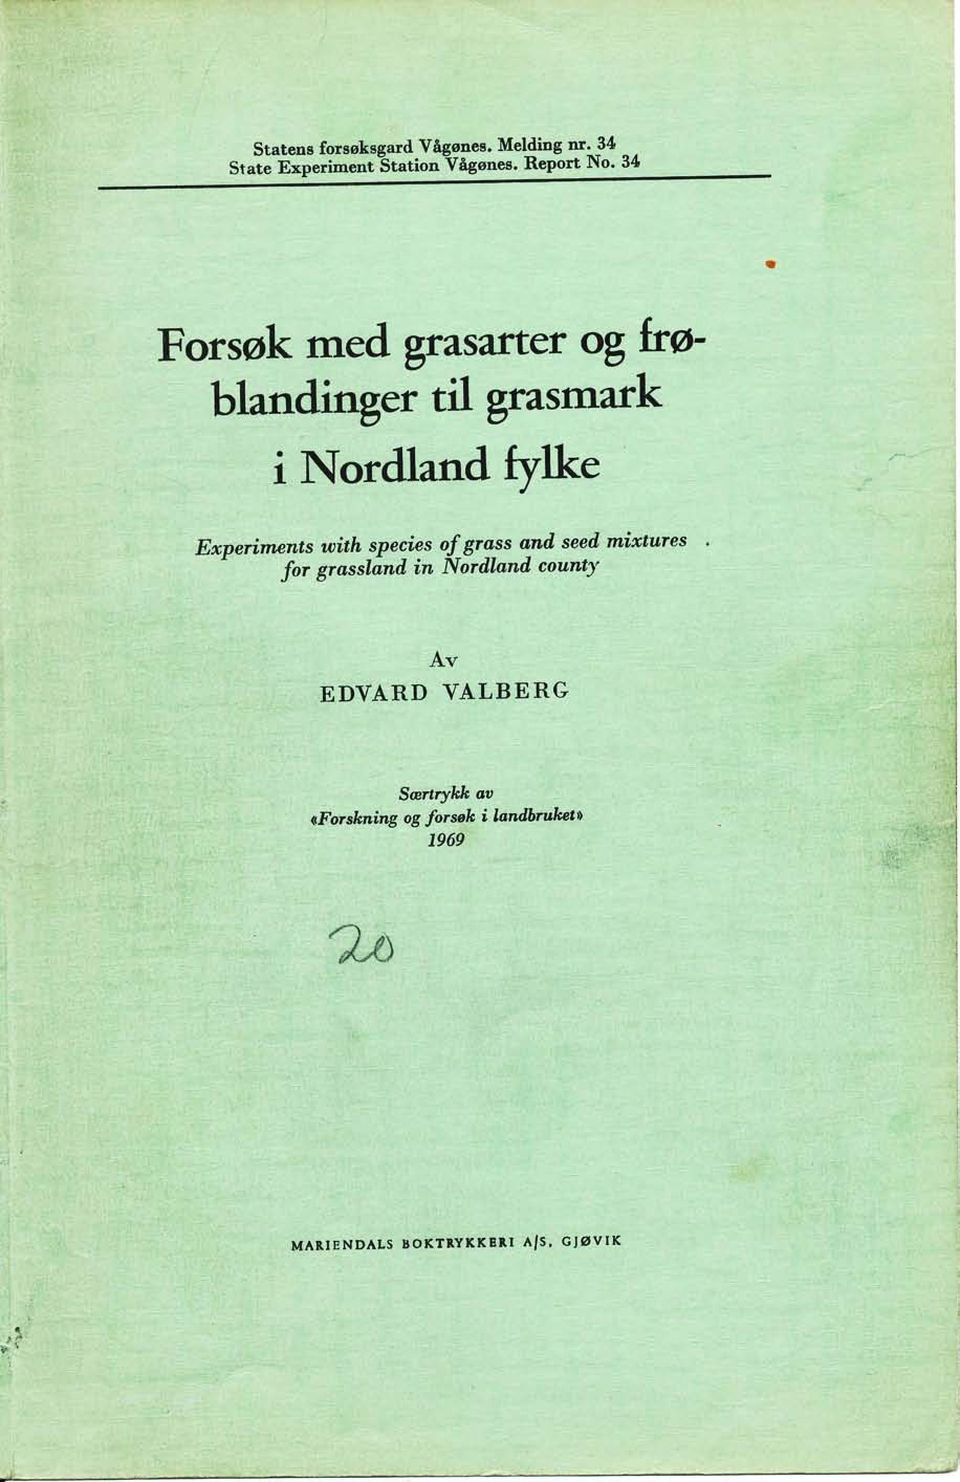 Experimants with species of grøss ønil seeil mixtures ' fo, grasslånil in Norillønil counqi